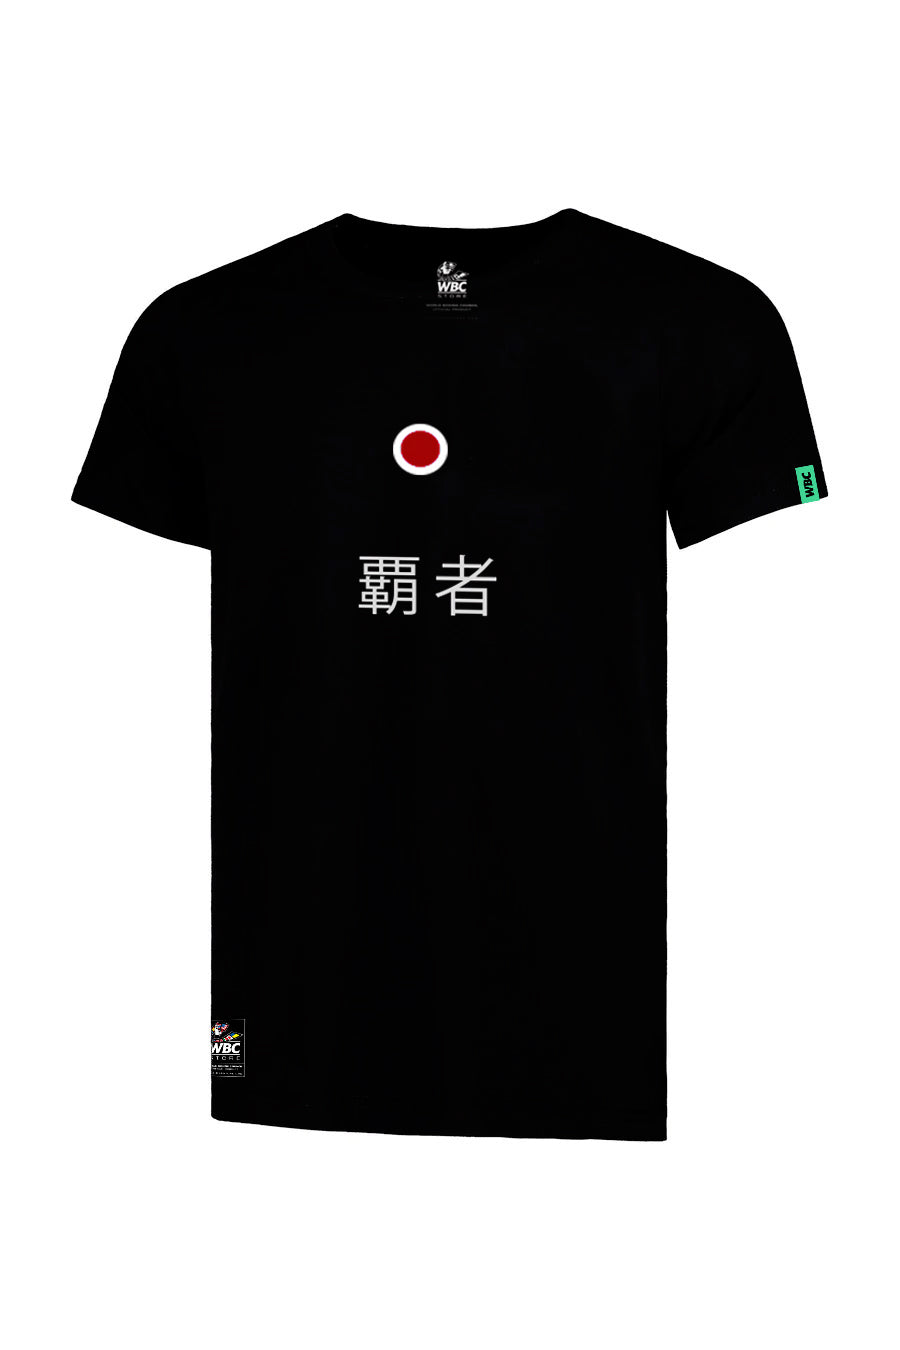 WBC Store WBC - Global Boxing Countries Japan T-shirt